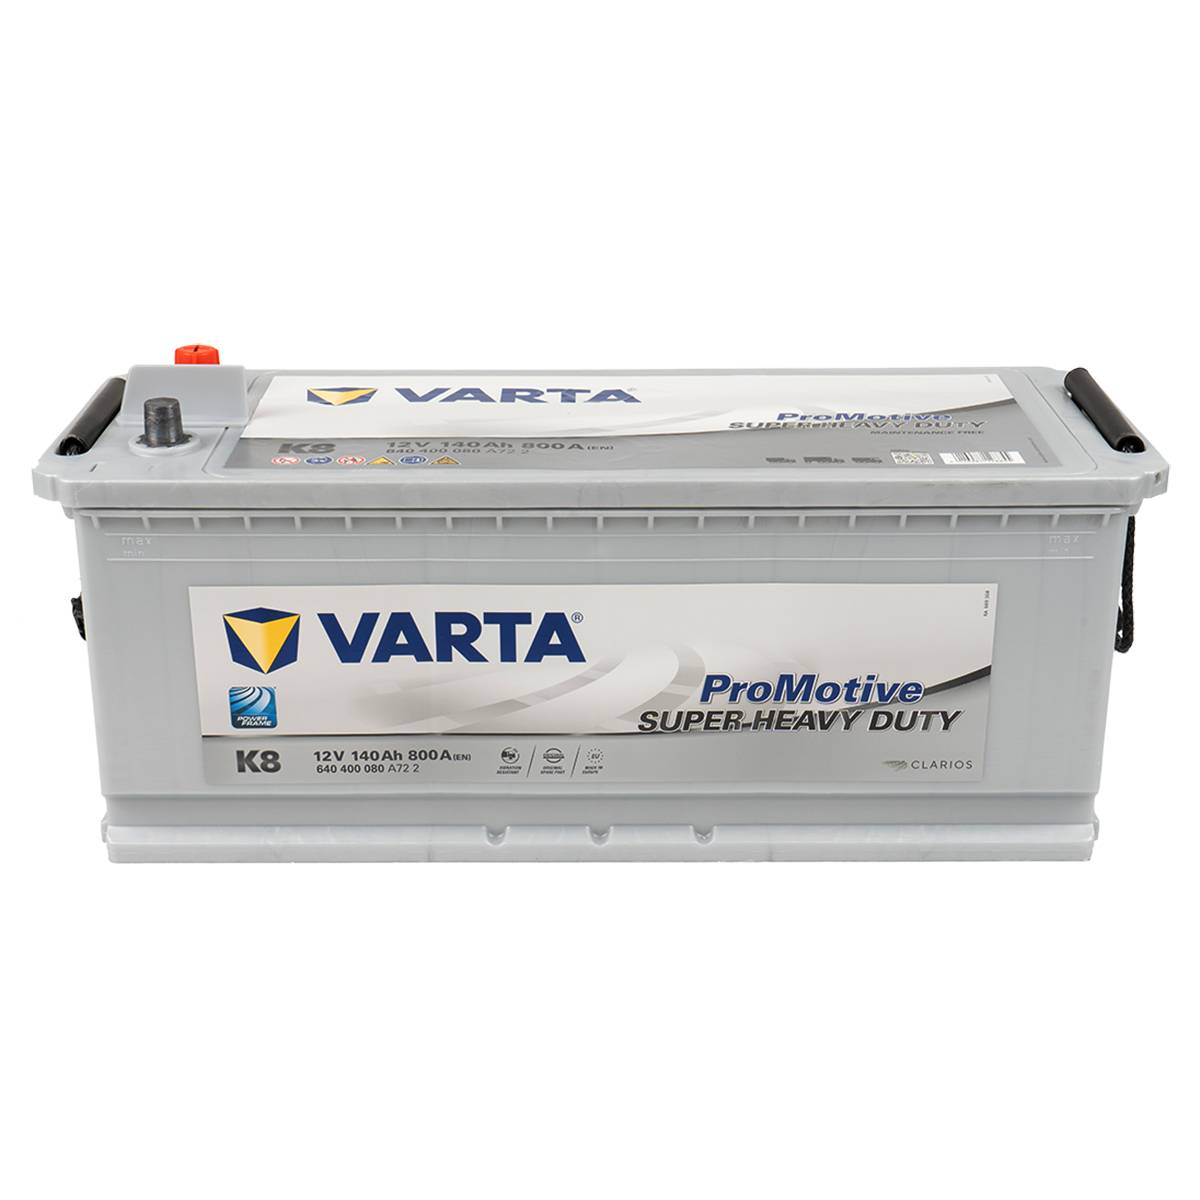 VARTA K8 ProMotive Super Heavy Duty 12V 140Ah 800A LKW Batterie 640 400 080